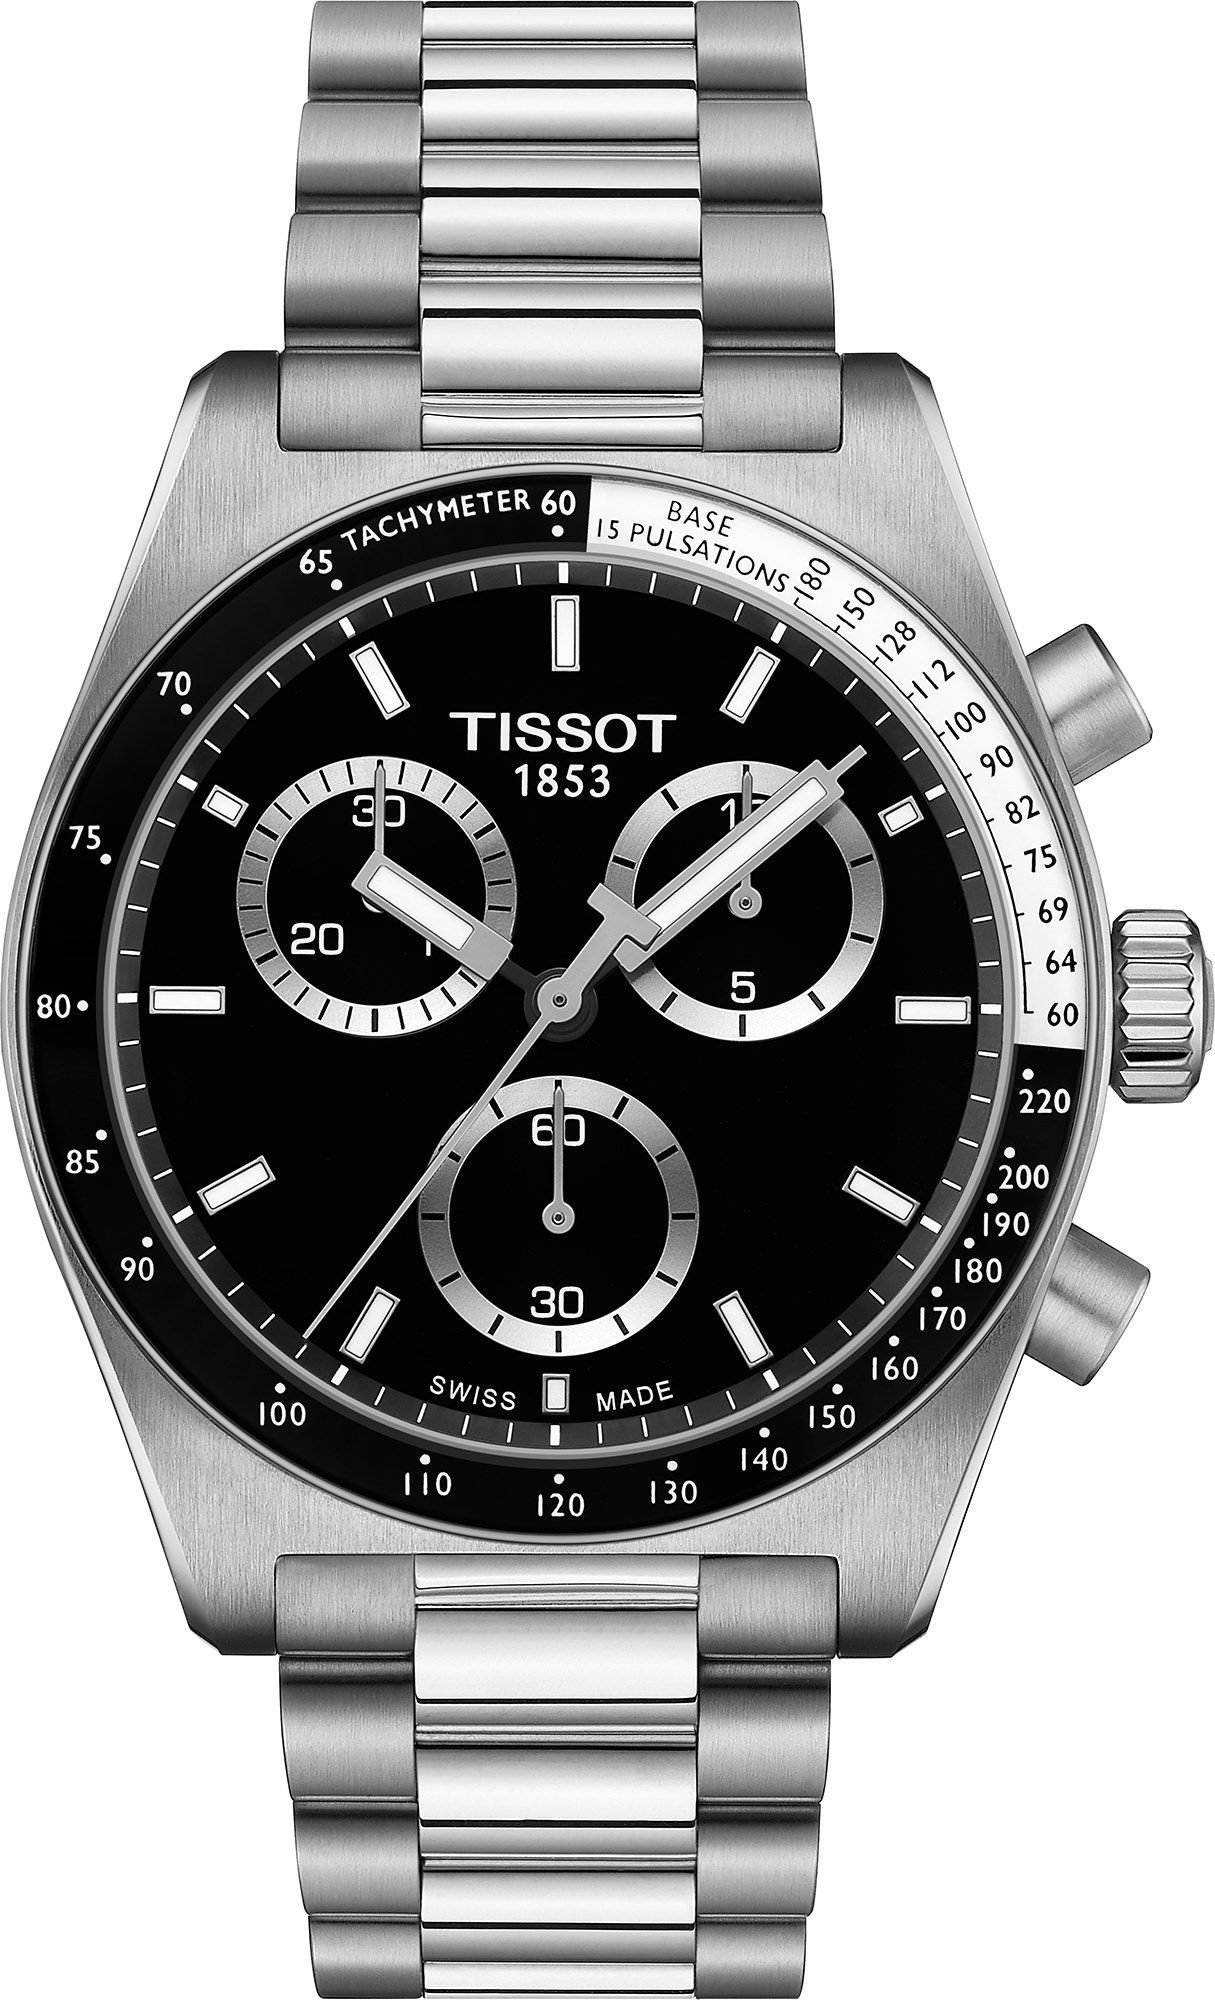 Tissot T-Sport Tissot PR516 Black Dial 40 mm Quartz Watch For Men - 1